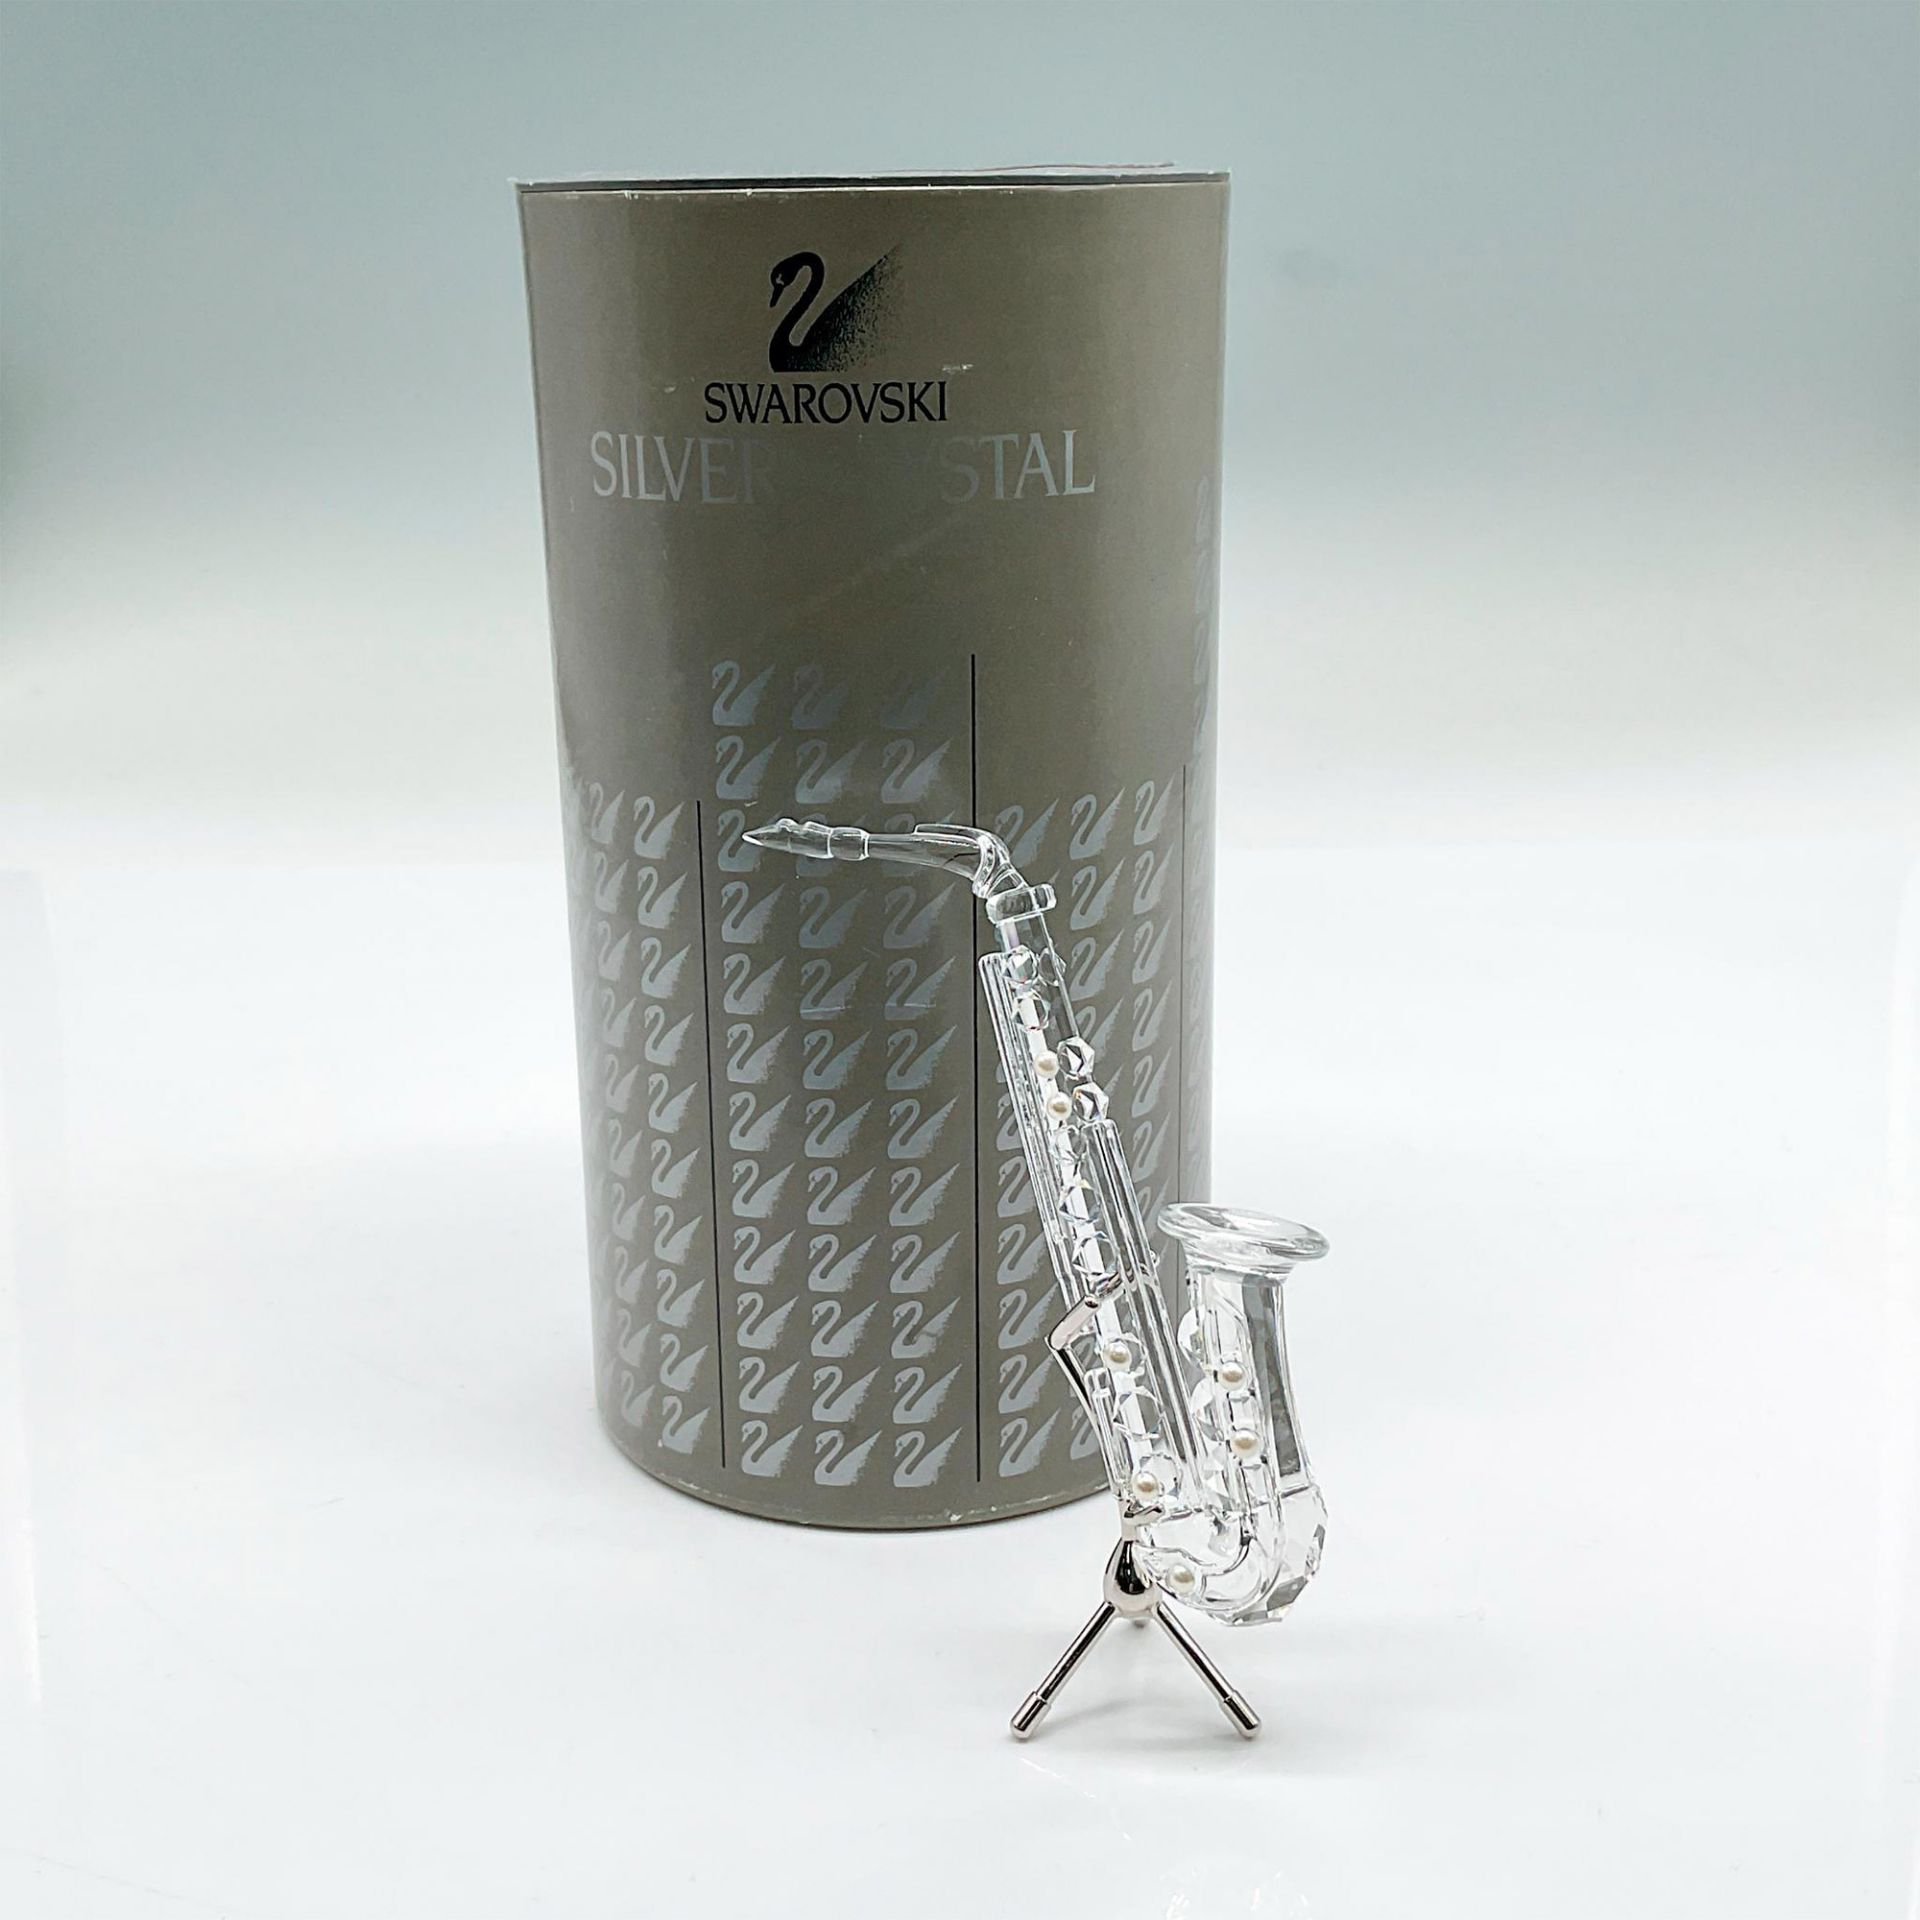 Swarovski Silver Crystal Figurine, Saxophone on Stand - Image 4 of 4